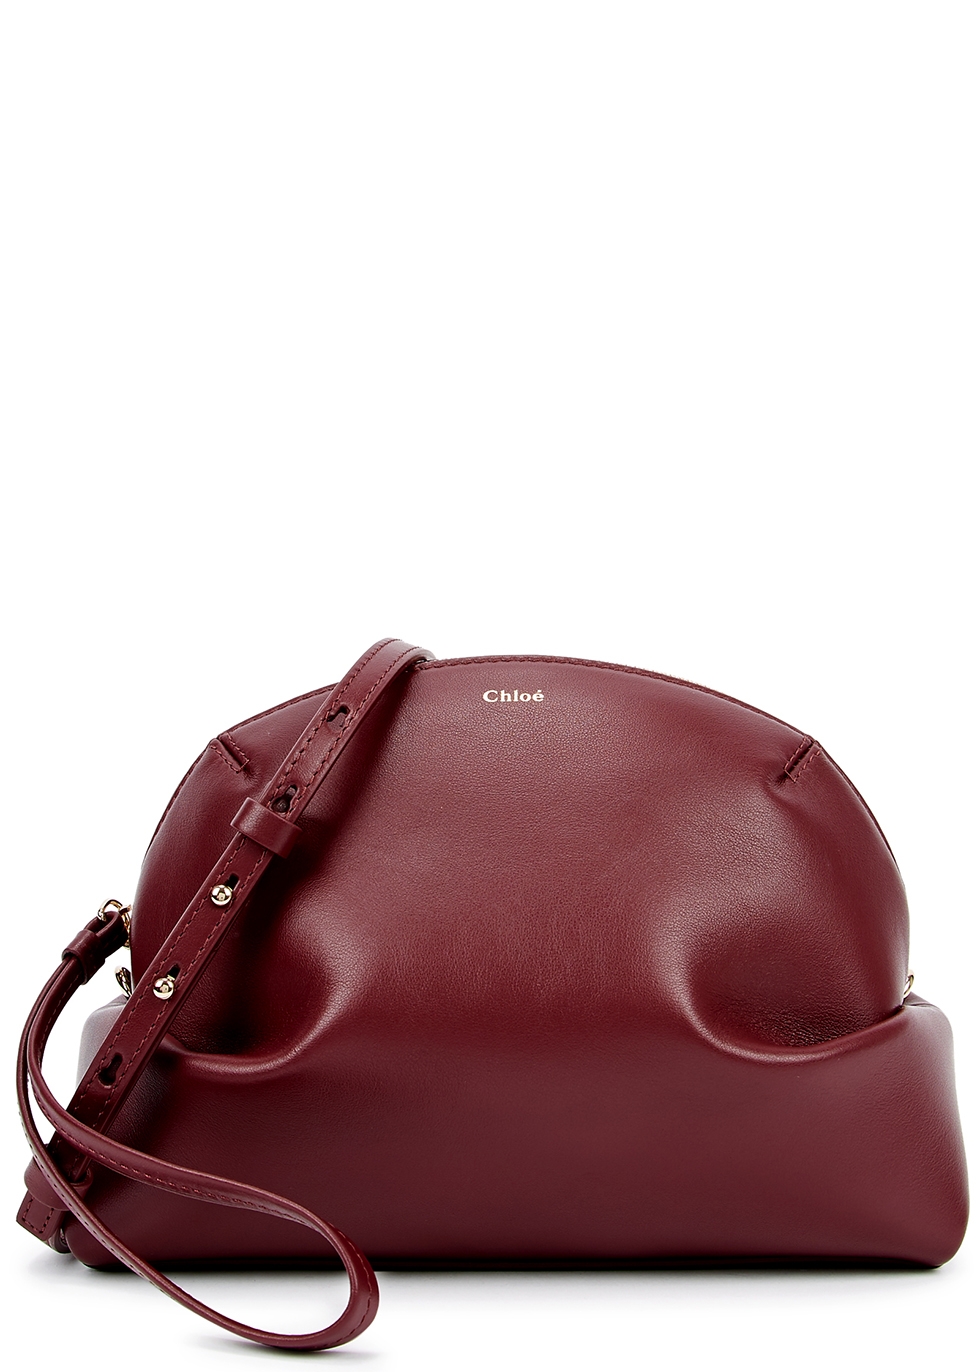 Chloé Judy small burgundy leather cross-body bag - Harvey Nichols